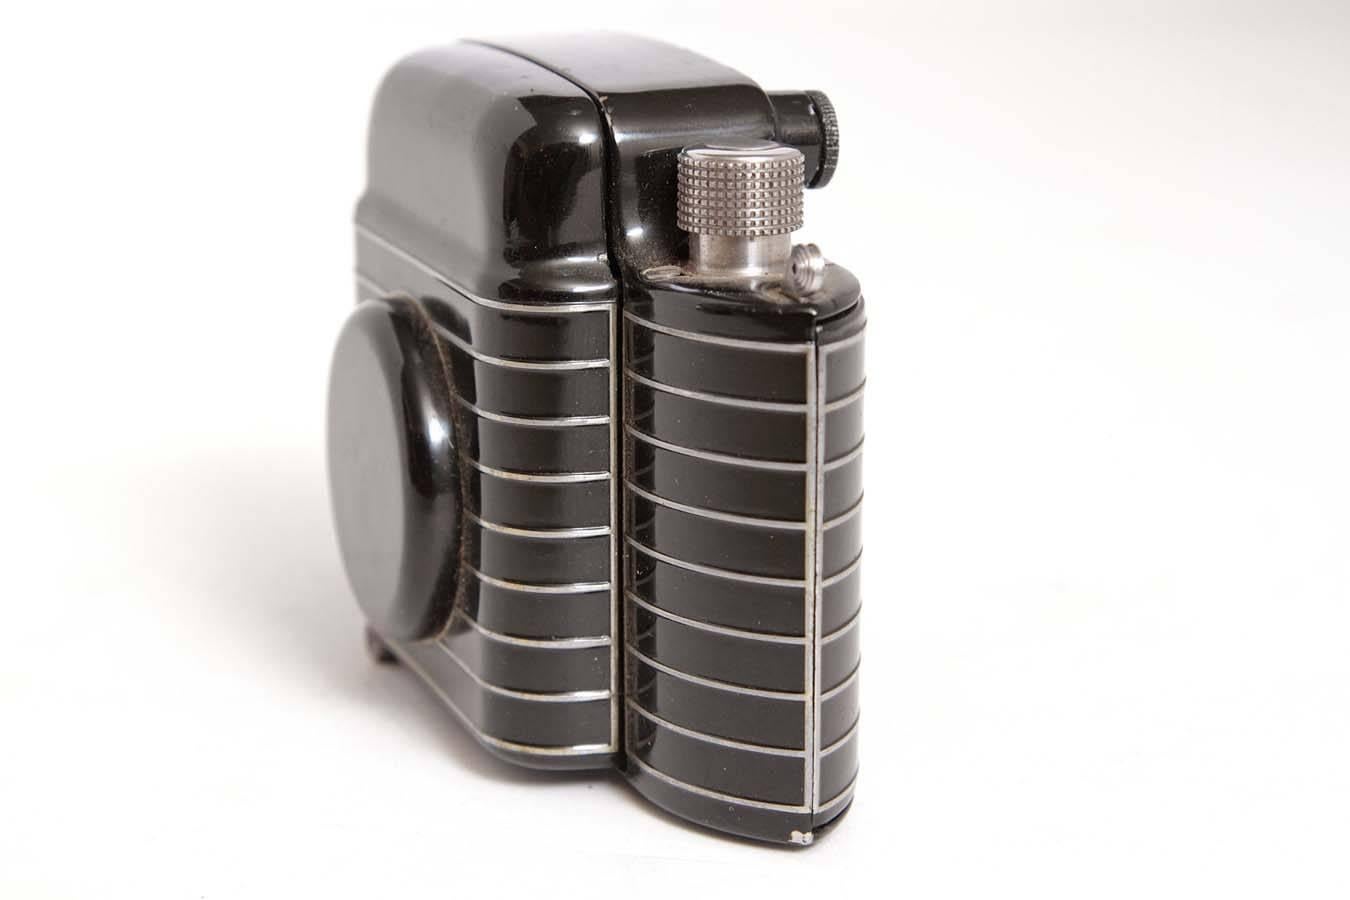 Trio Machine Age Teague Designed Kodak Cameras Bantam World's Fair In Good Condition For Sale In Dallas, TX